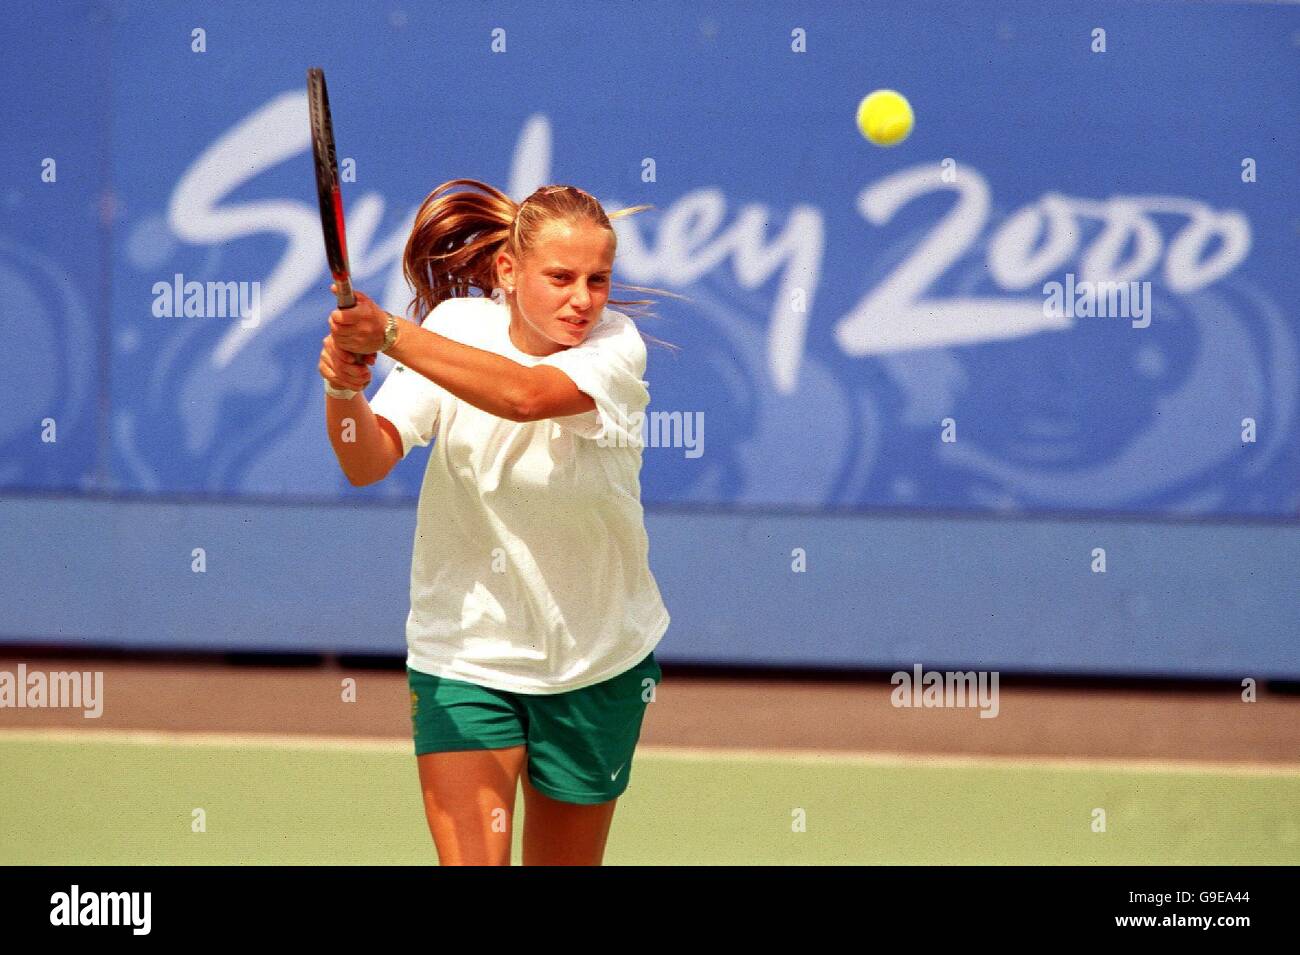 Tennis - Sydney 2000 Olympics - Training. Jelena Dokic in action Stock Photo